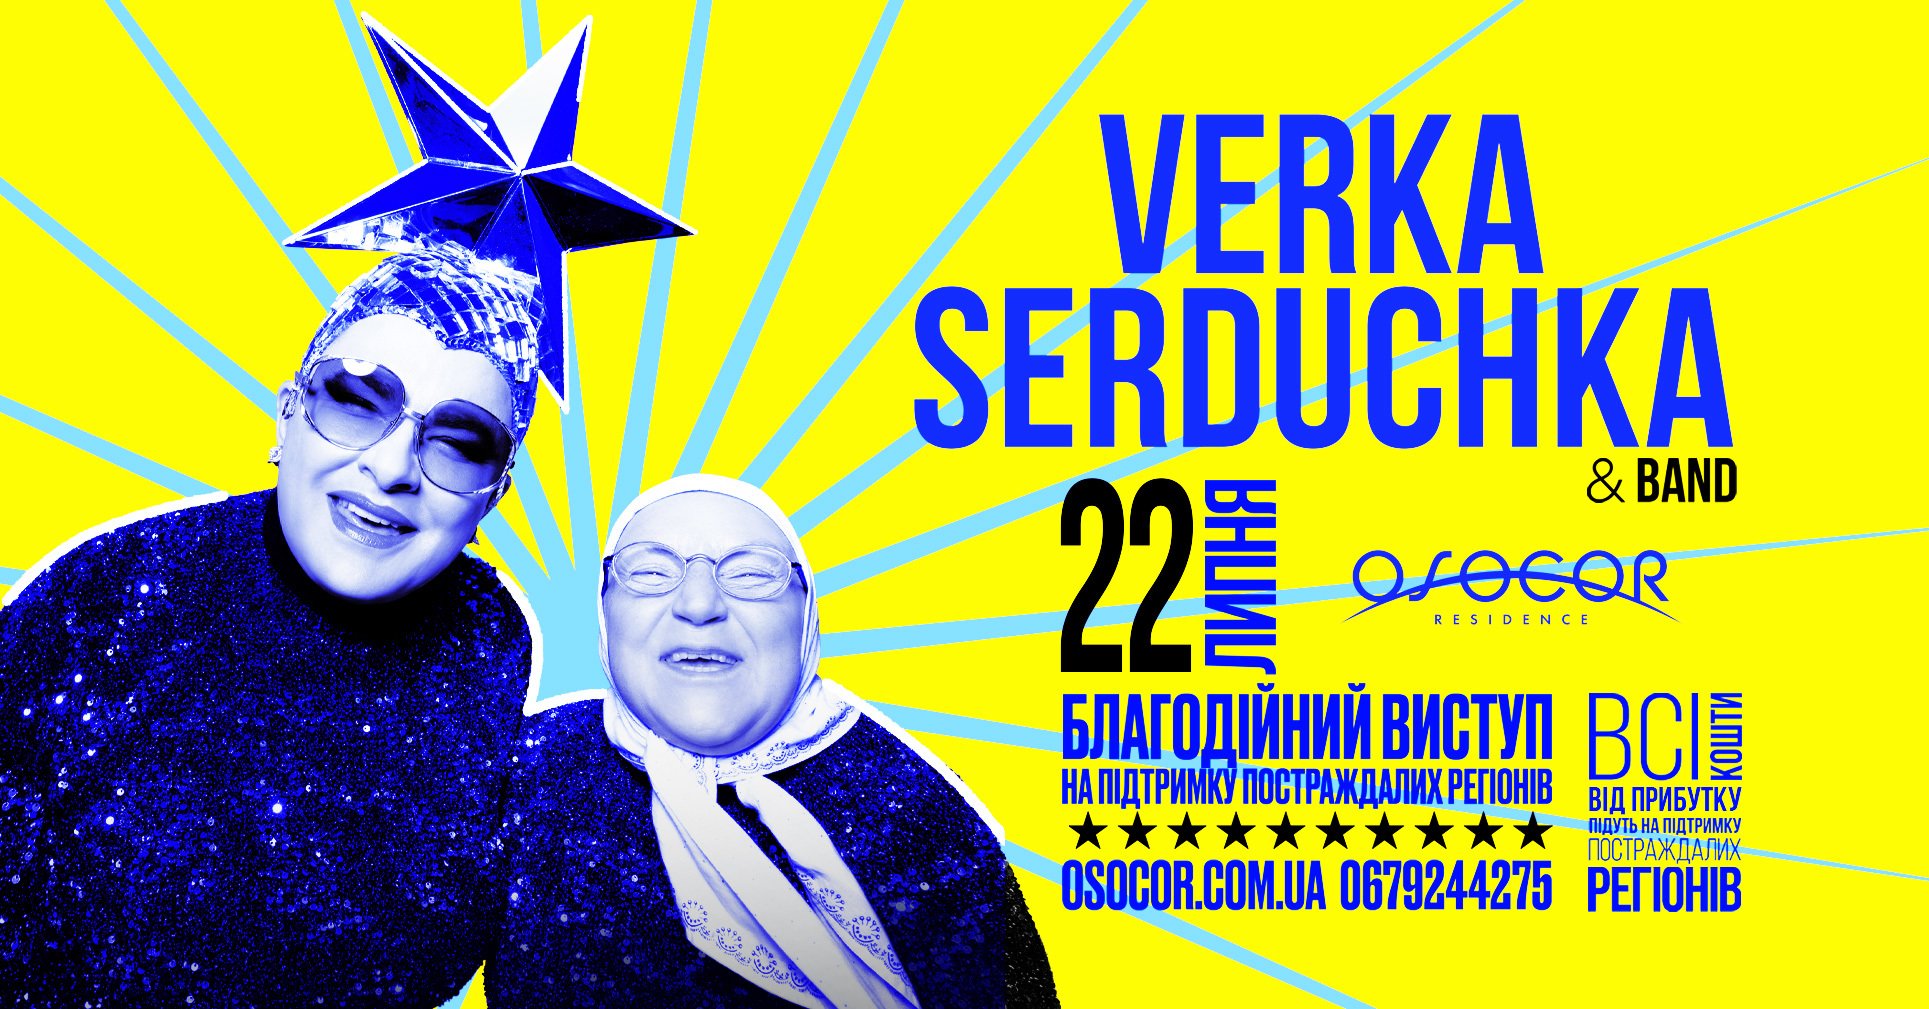 Великий благодійний виступ Verka Serduchka